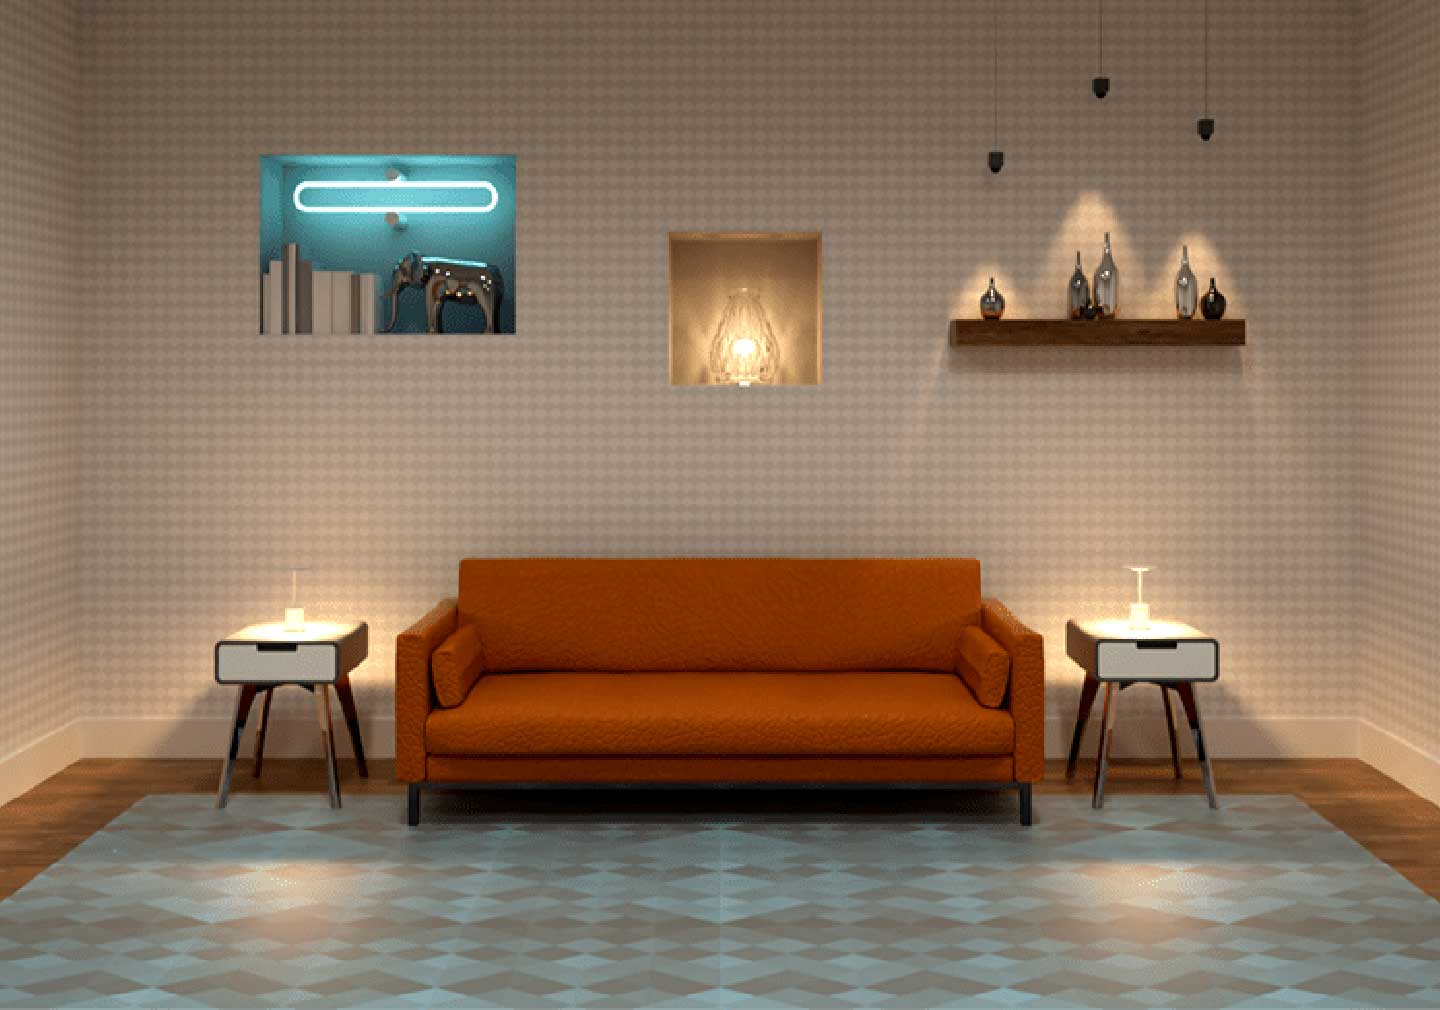 Statement Lighting: Illuminating Elegance for home interior designs